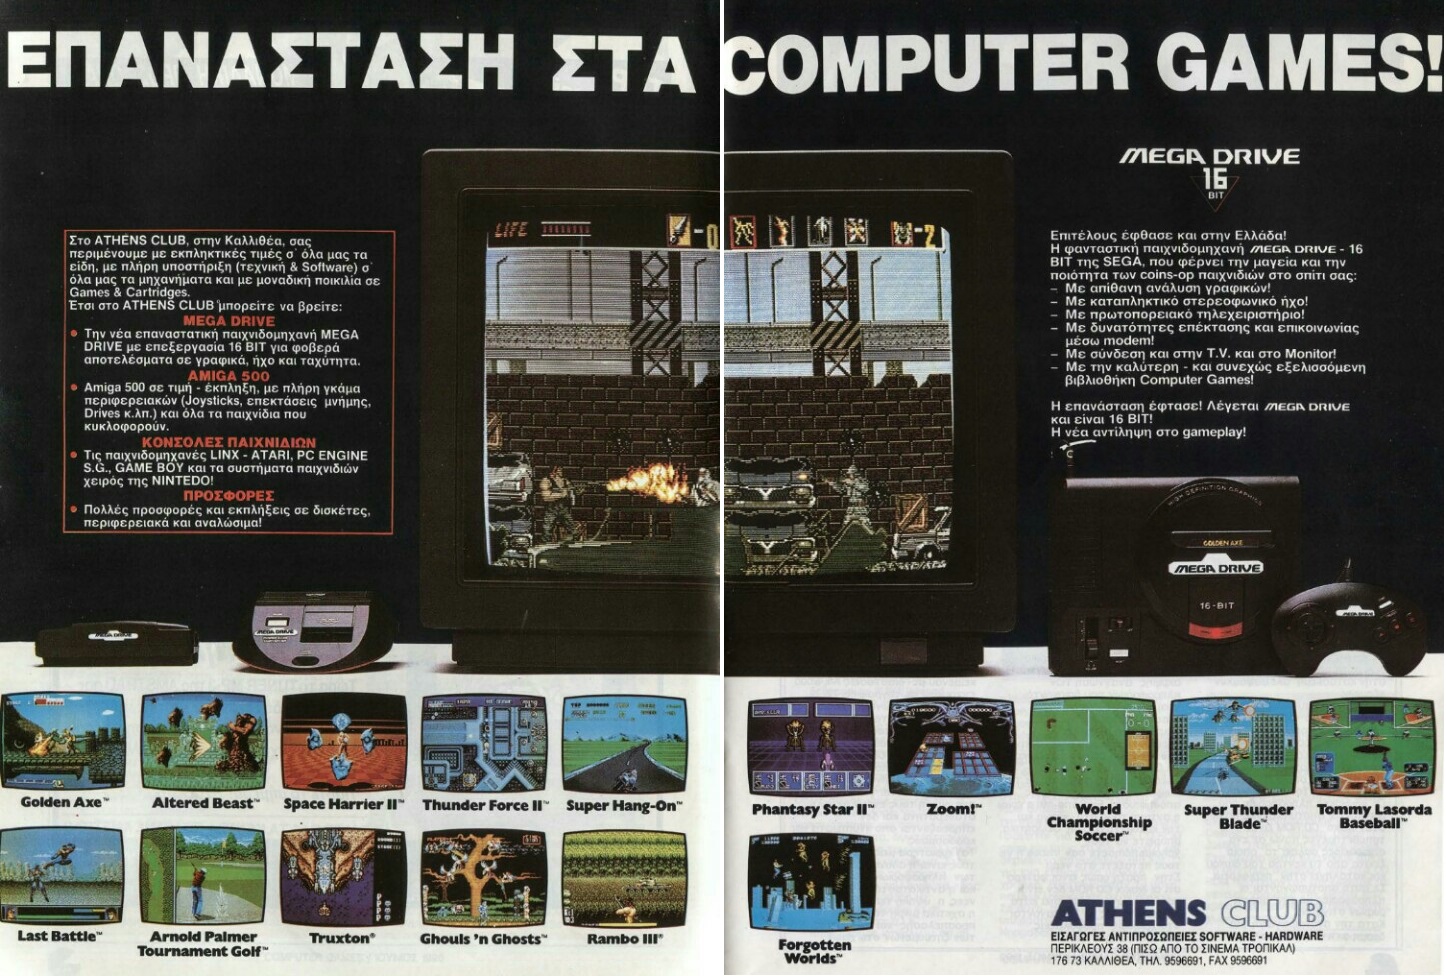 CG GR 3 Mega Drive advert.jpg